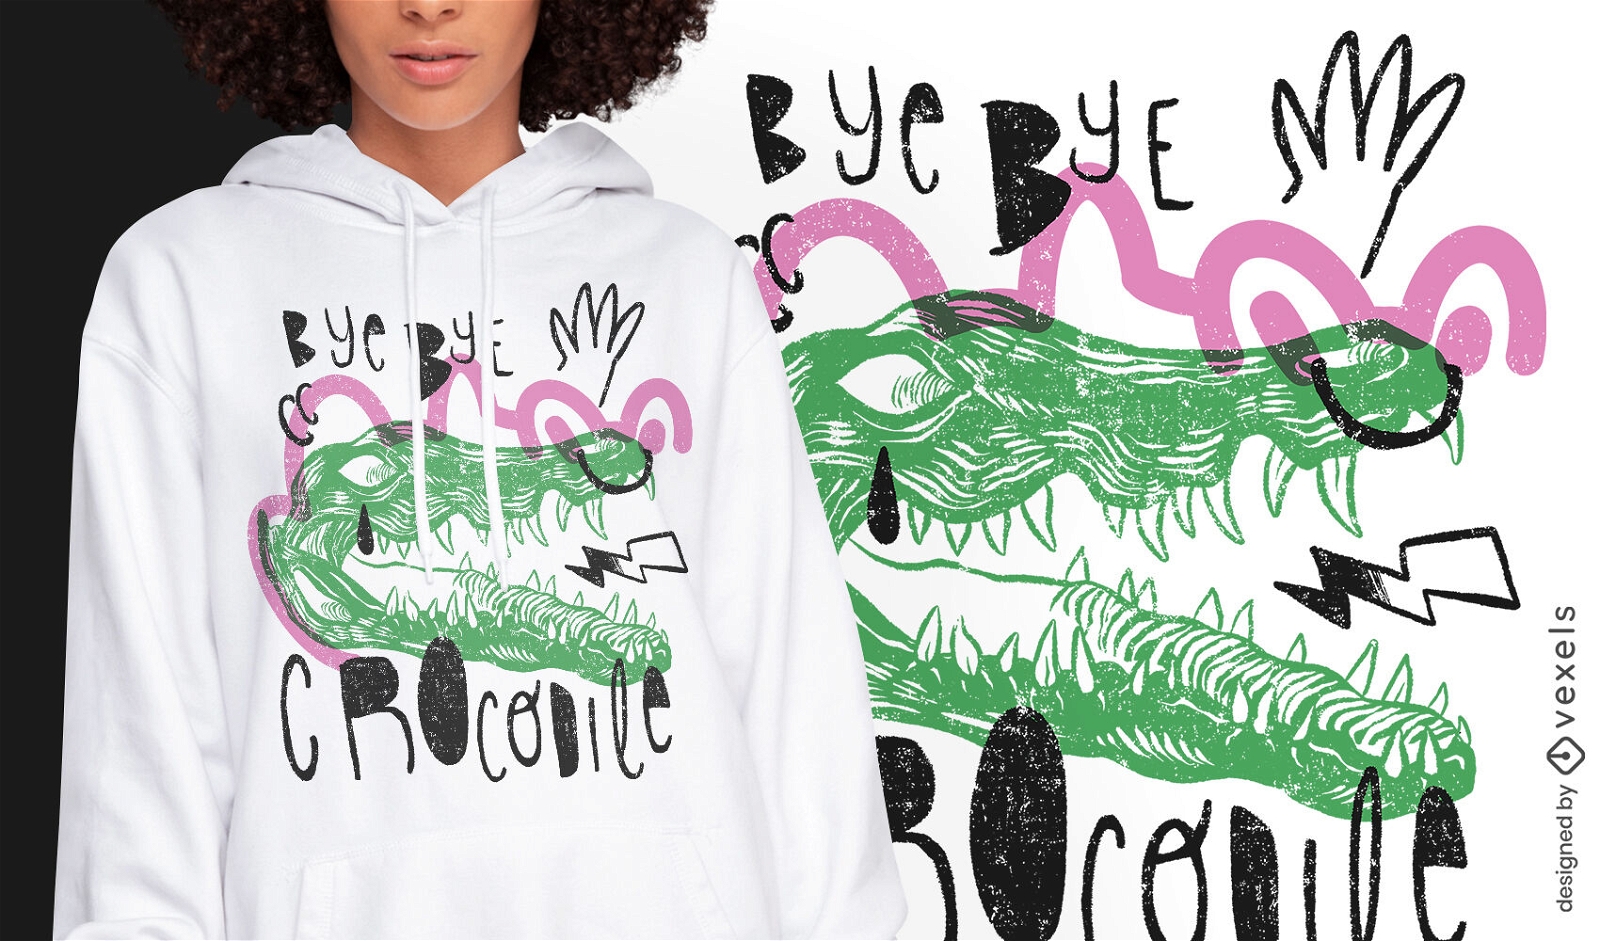 Bye crocodile t-shirt design